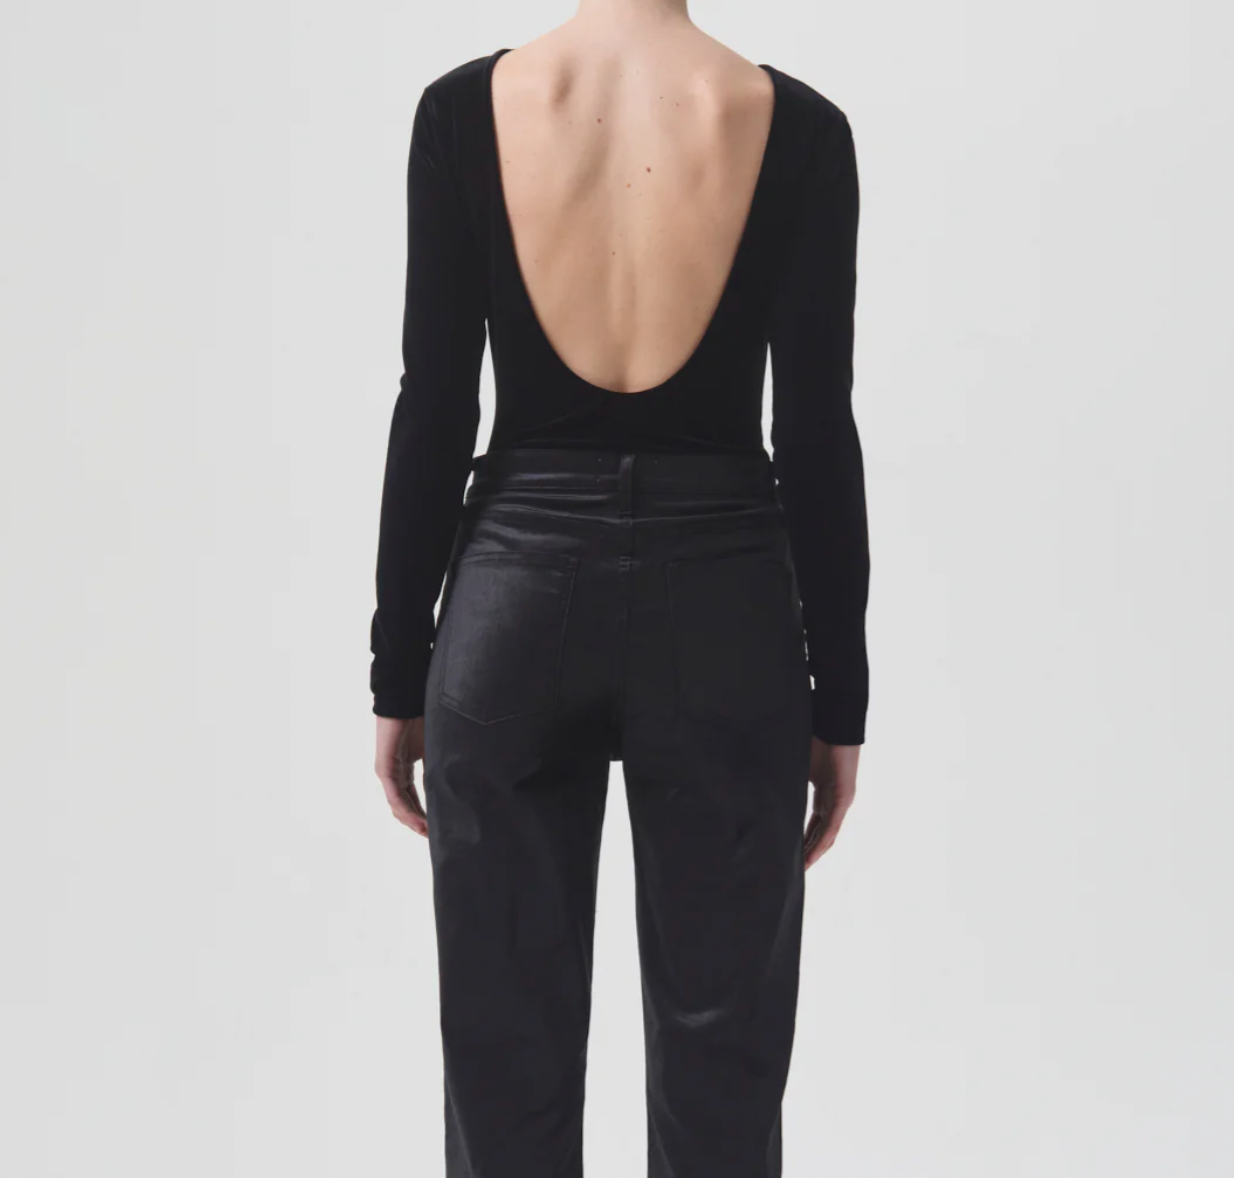 Product Image for Corrin Scoop Back Bodysuit, Black